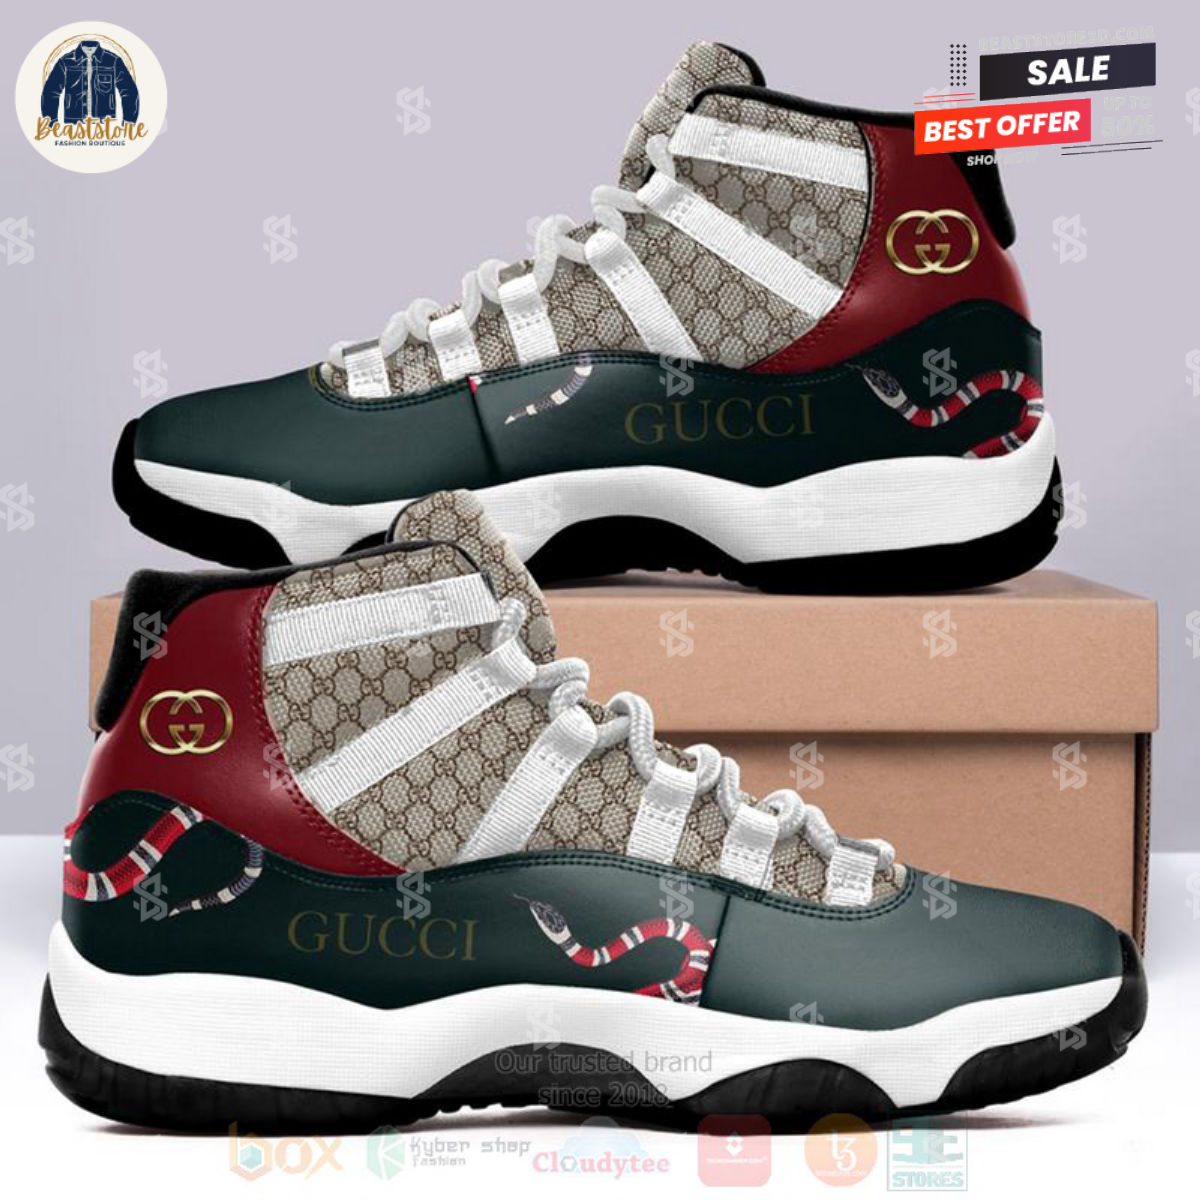 Gucci Snake Green Red White Air Jordan 11 High Top Sneaker Shoes